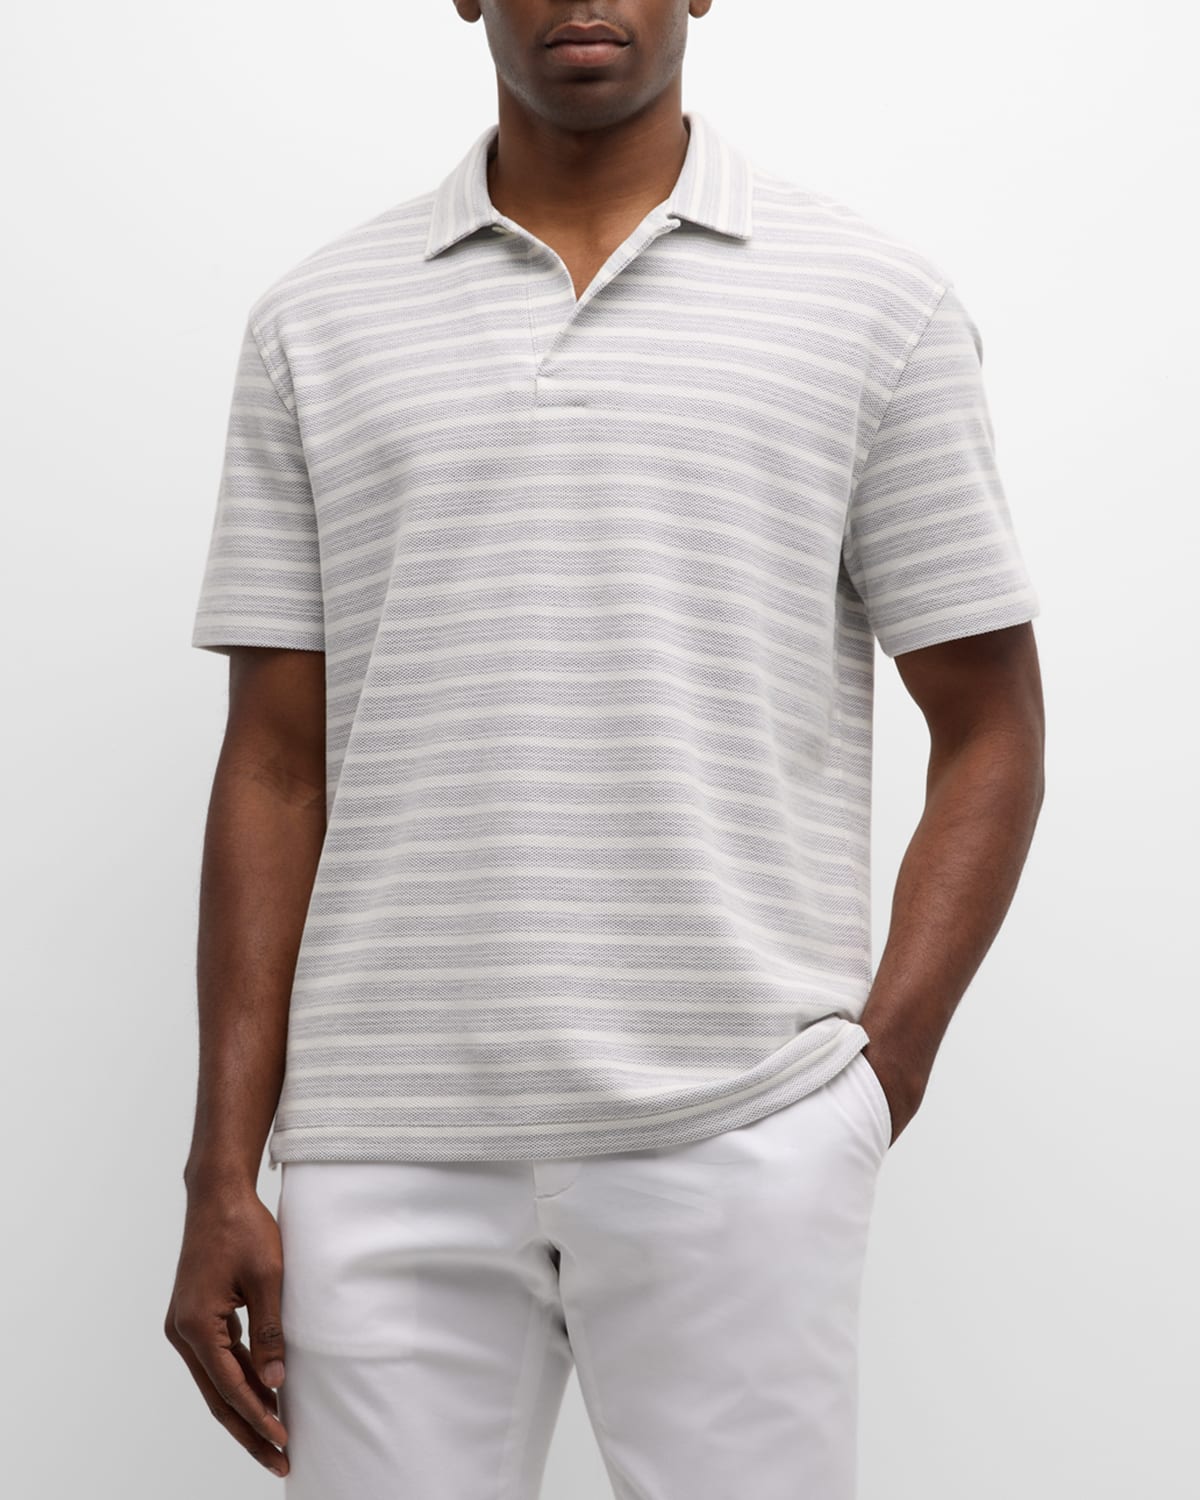 Zegna Men's Cotton Stripe Polo Shirt In Light Gray Solid